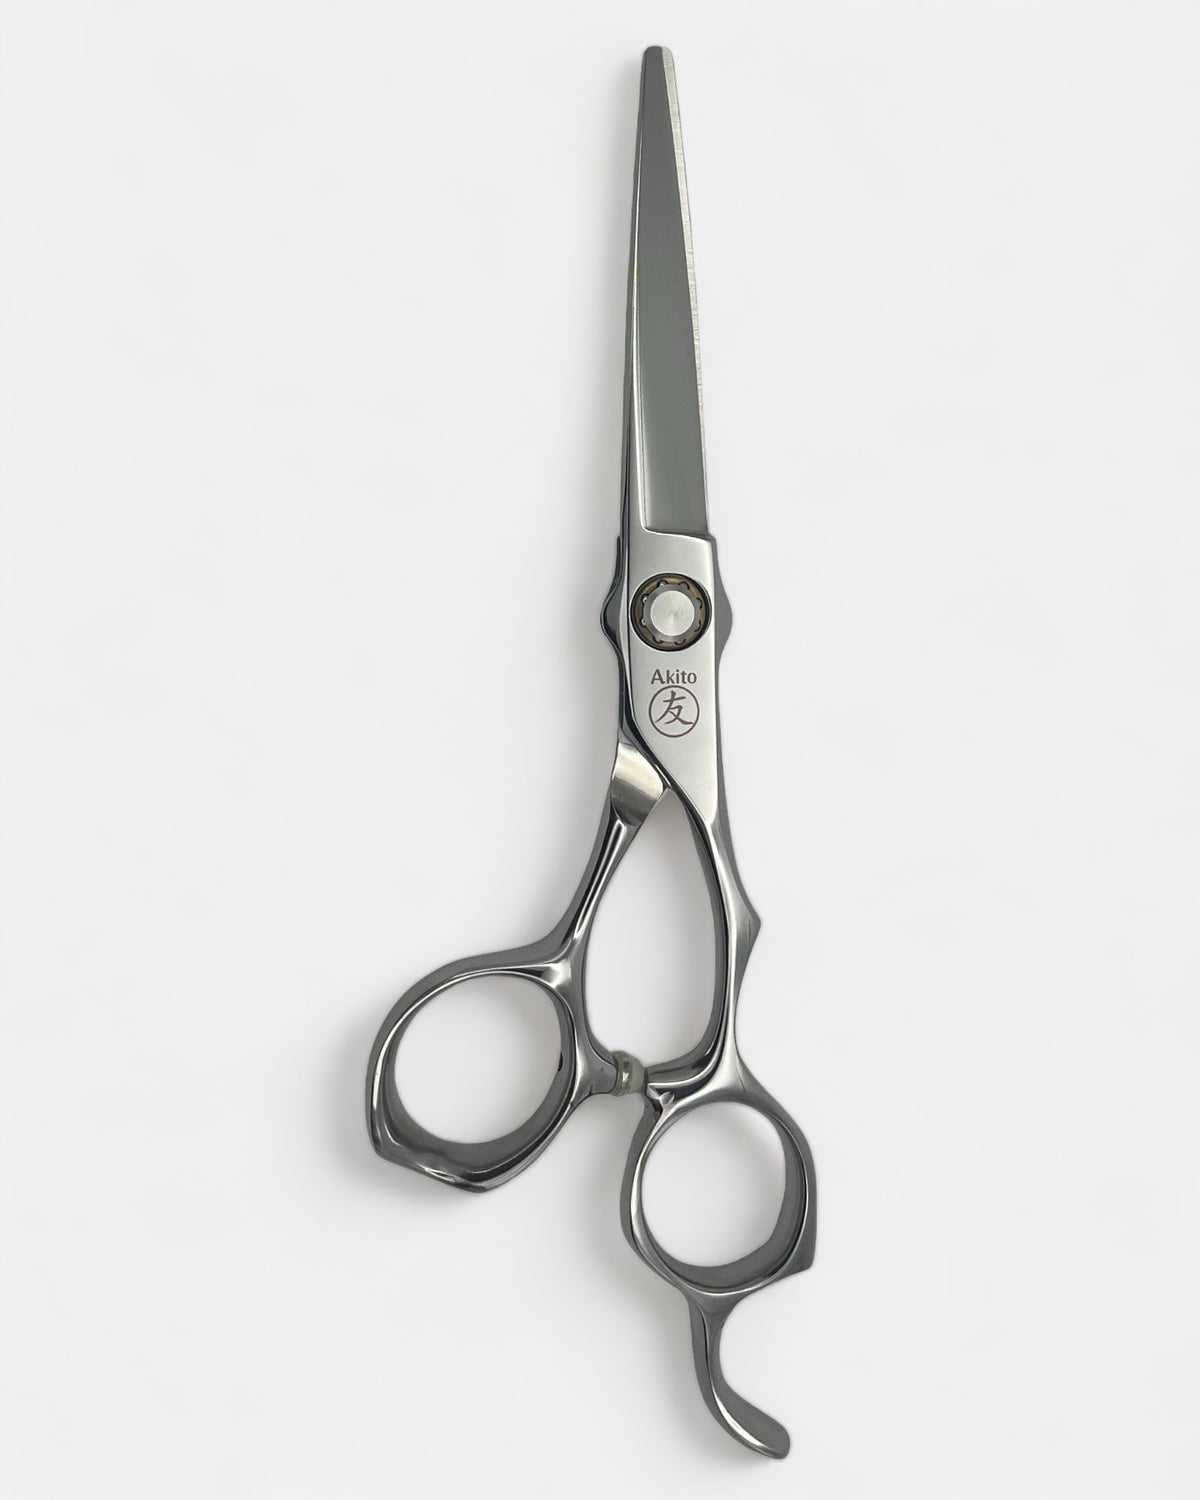 Kasai CNP Professional Hair Scissors on grey